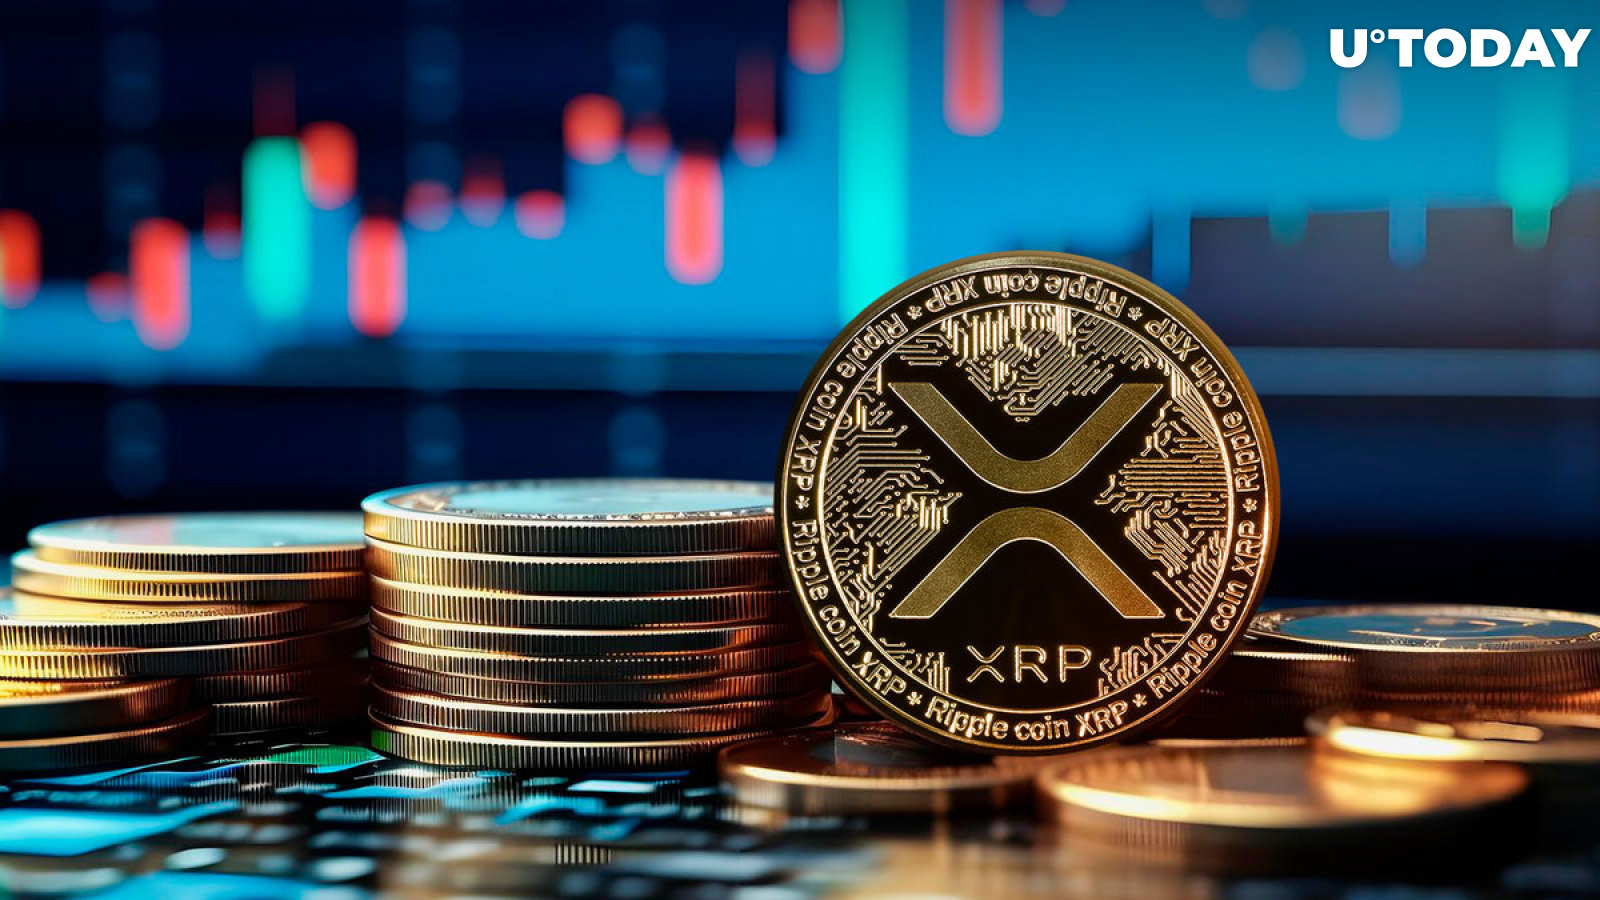 XRPUSD — Ripple Price and Chart — TradingView